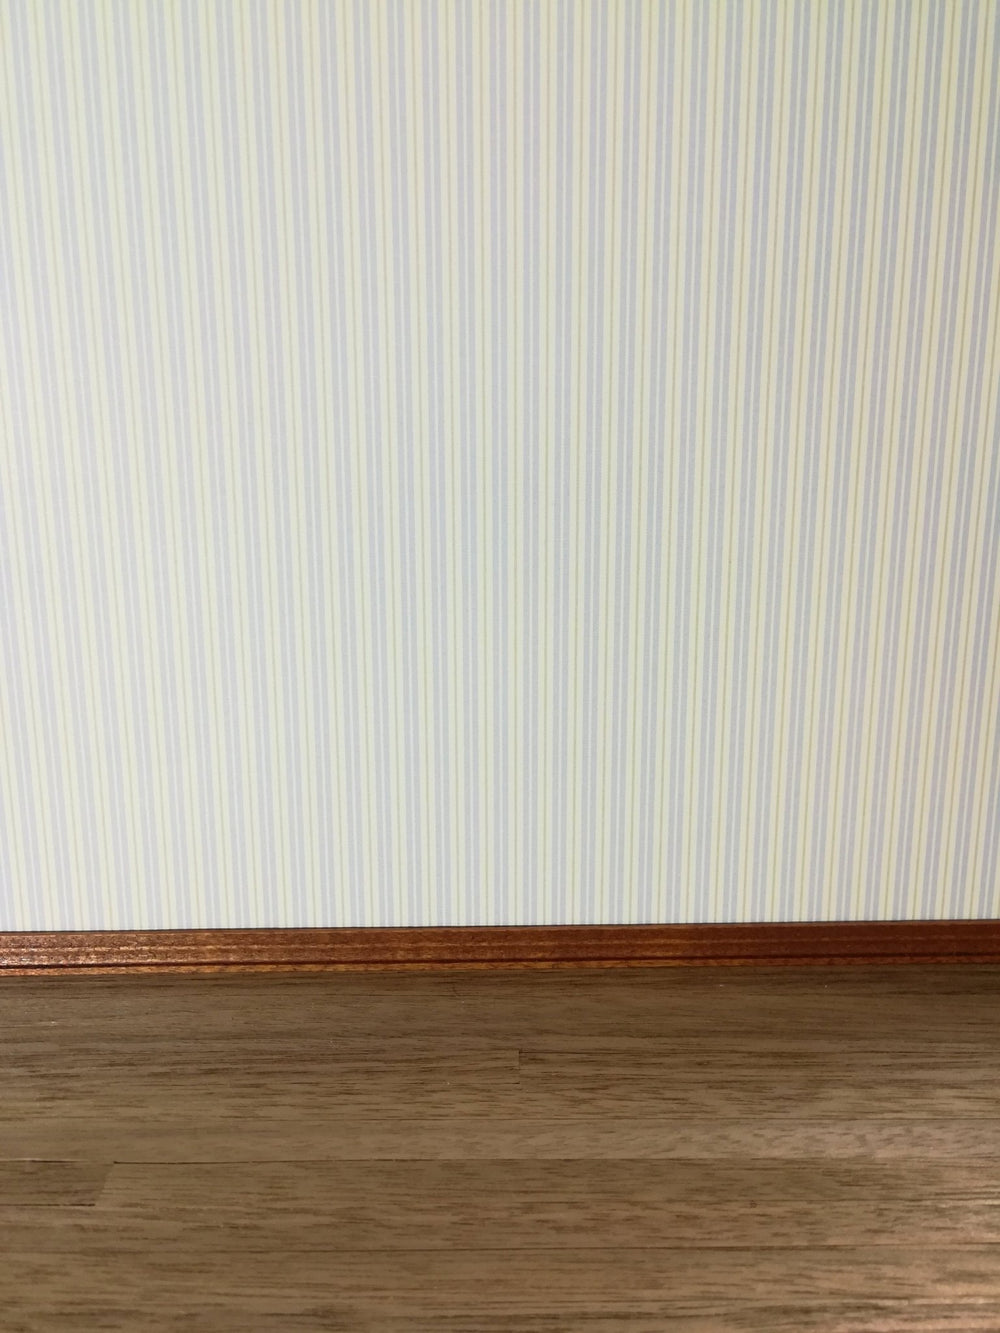 Dollhouse Brodnax Wallpaper Striped Pale Blue Green Cream "Seaside Stripe" 1:12 Scale - Miniature Crush